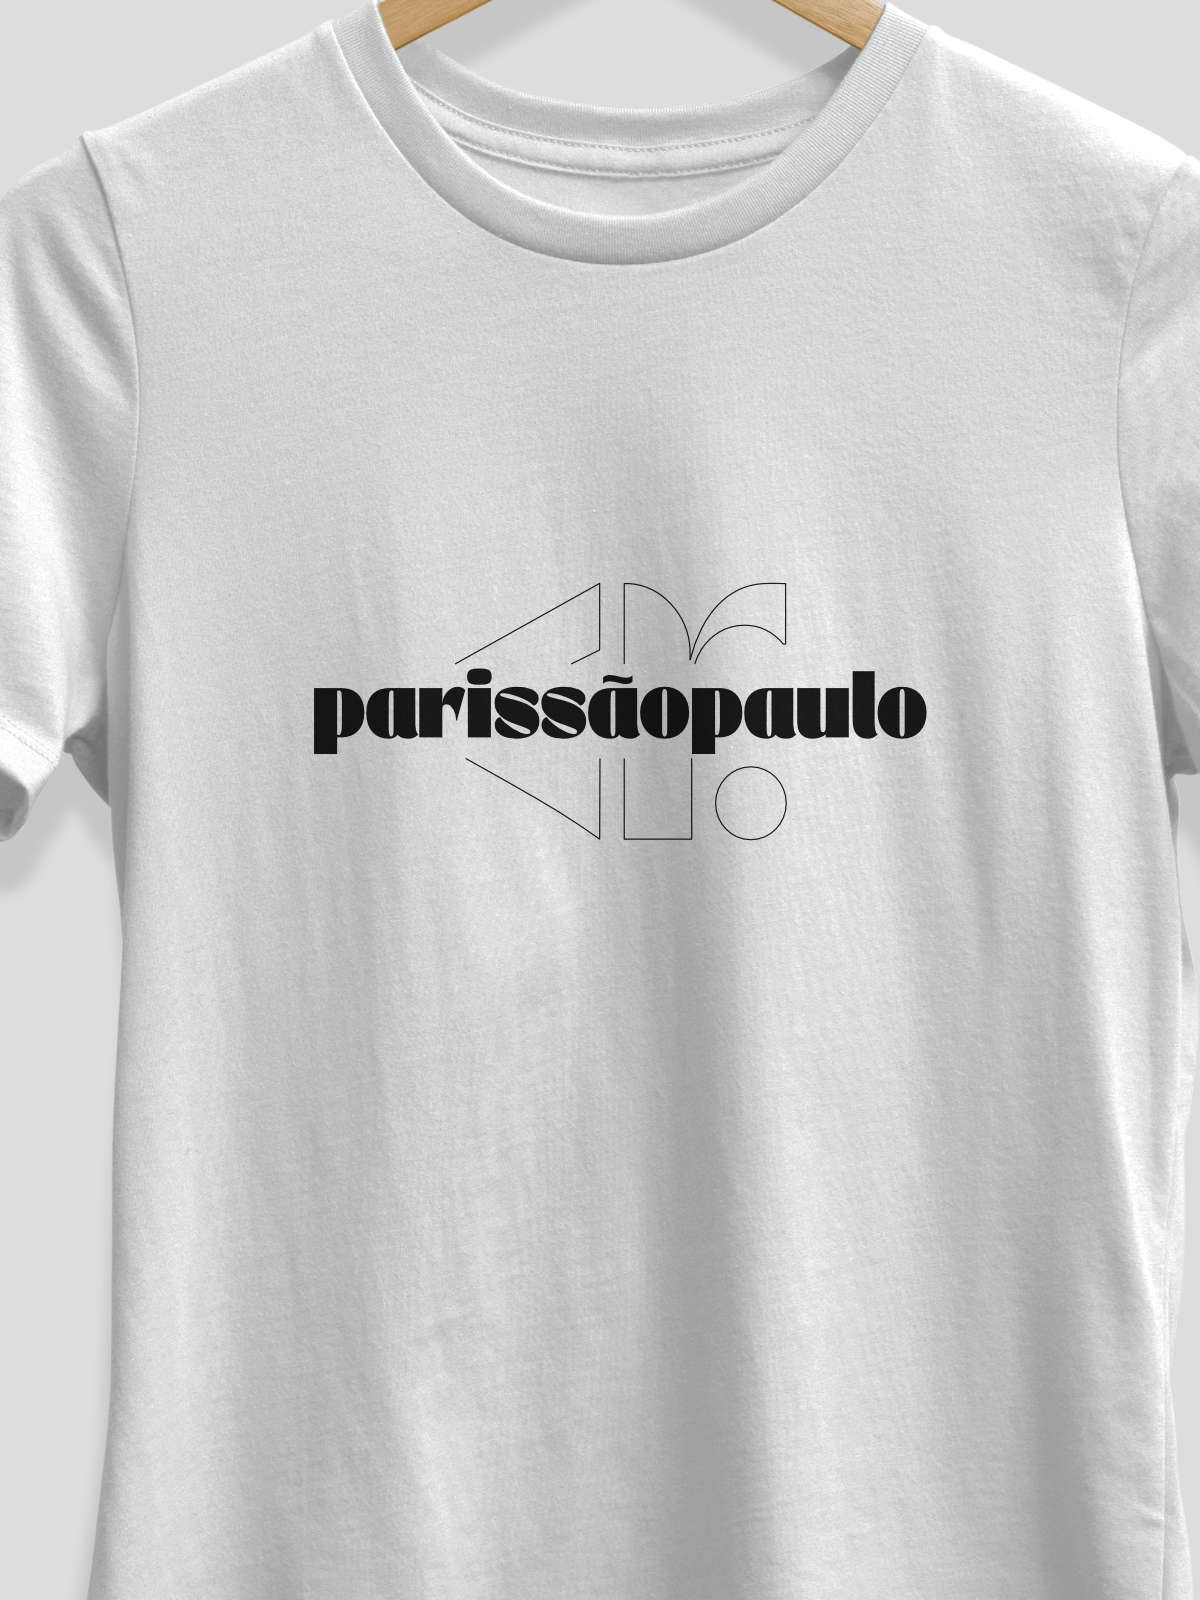 Paris Sāo Paulo t-shirt men